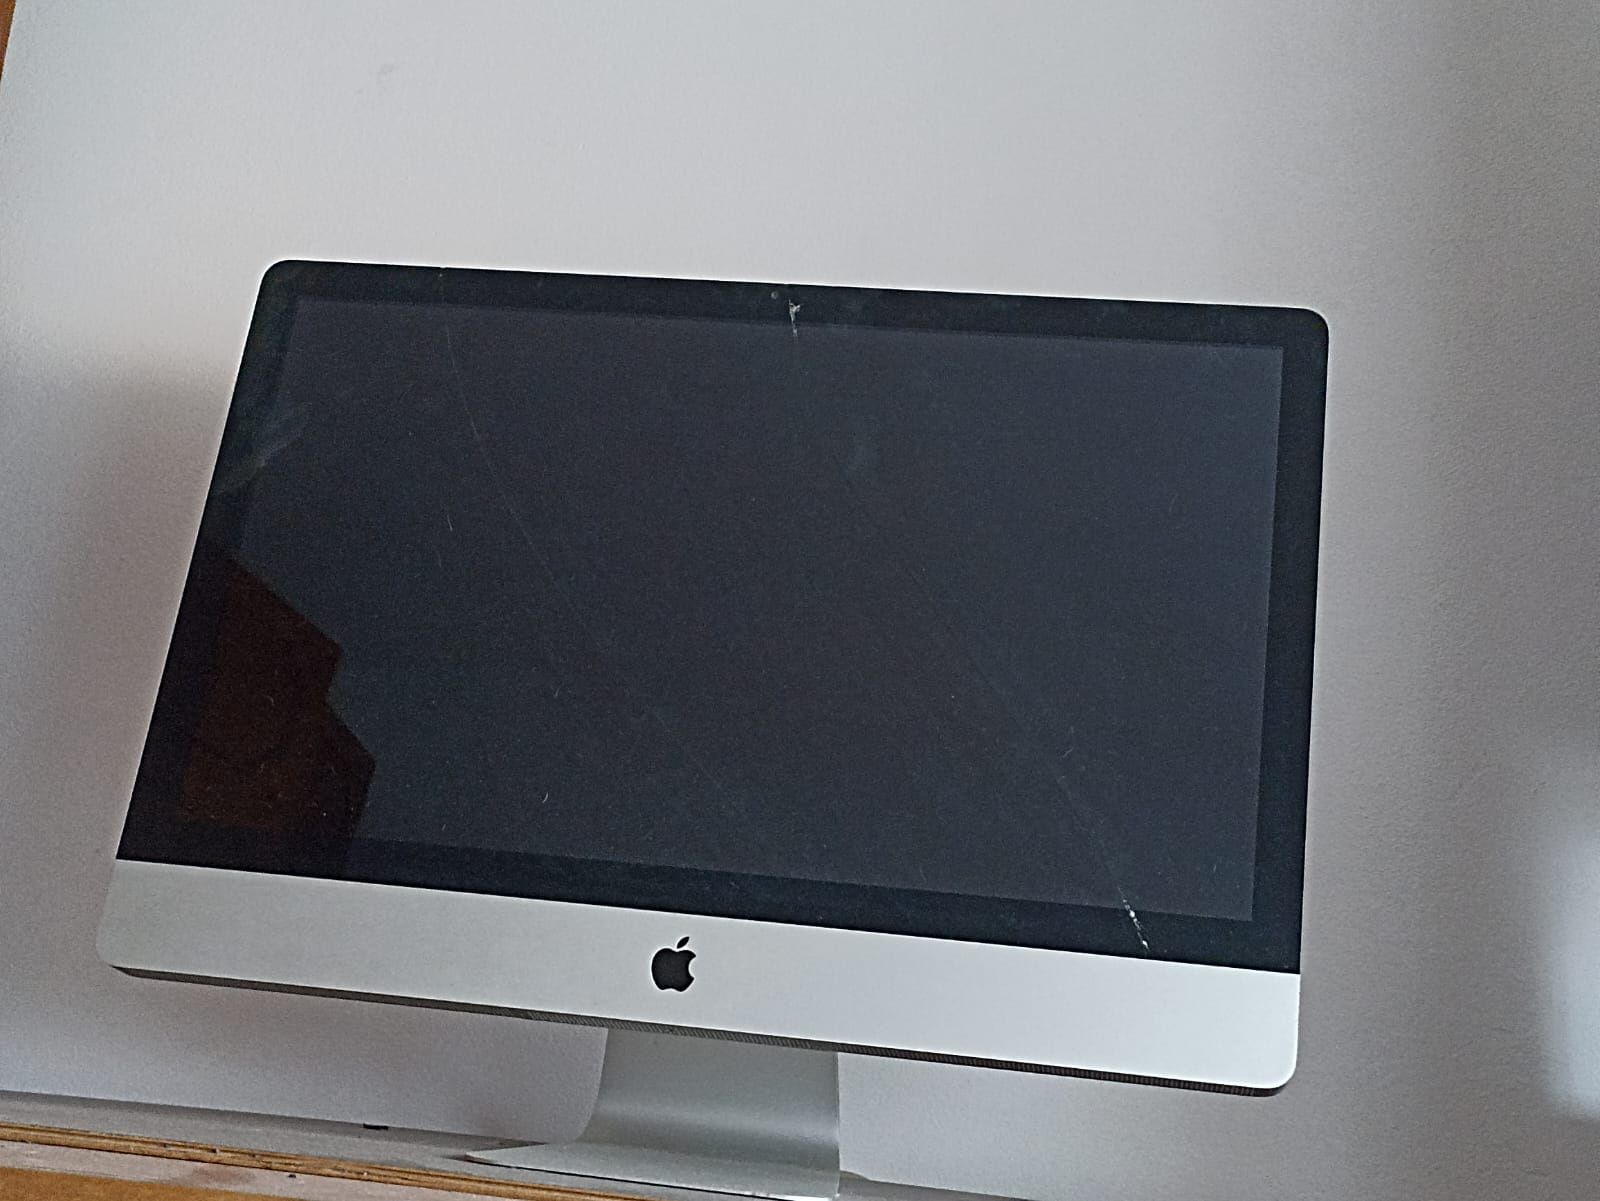 iMac 27” late 2009 ssd 256 GB 16 GB ram